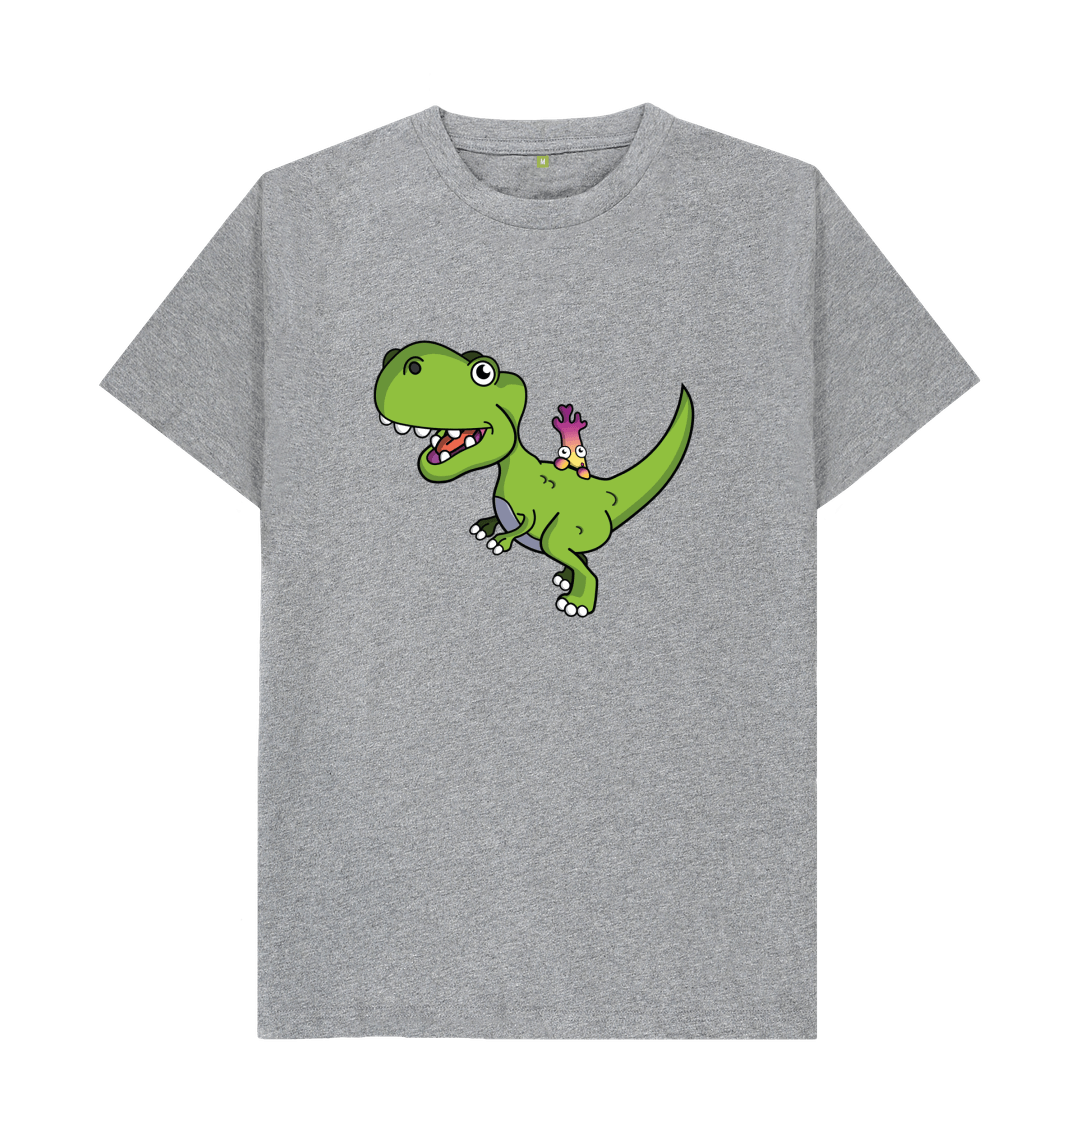 Athletic Grey Organic Cotton Shy-nosaur Dinosaur Graphic Only Mental Health Men's T-Shirt